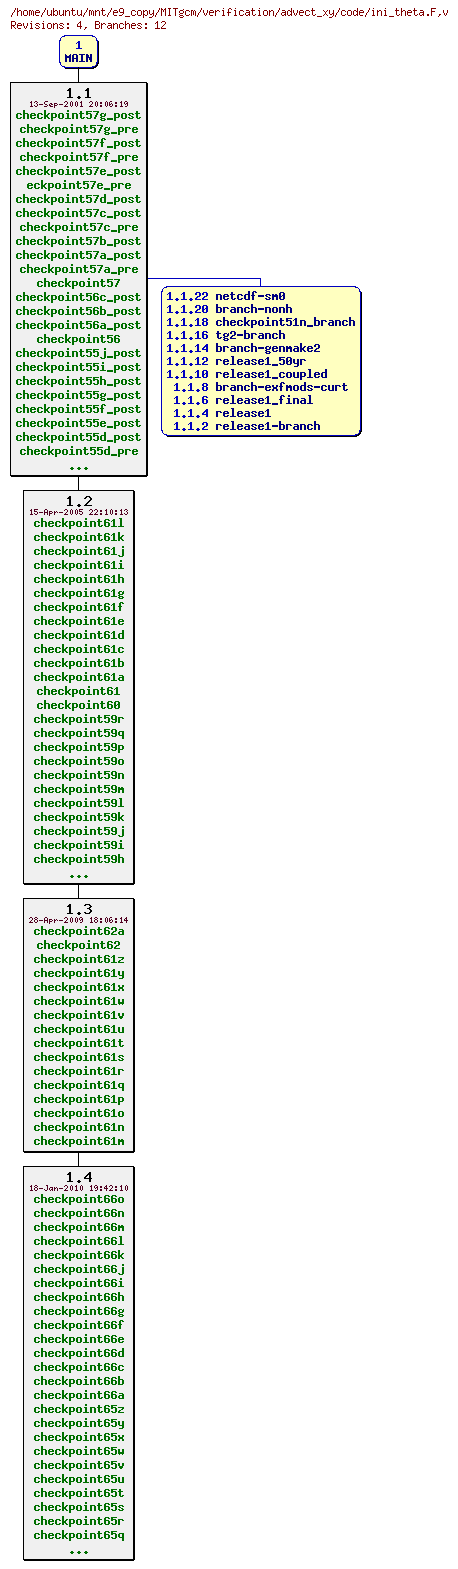 Revisions of MITgcm/verification/advect_xy/code/ini_theta.F